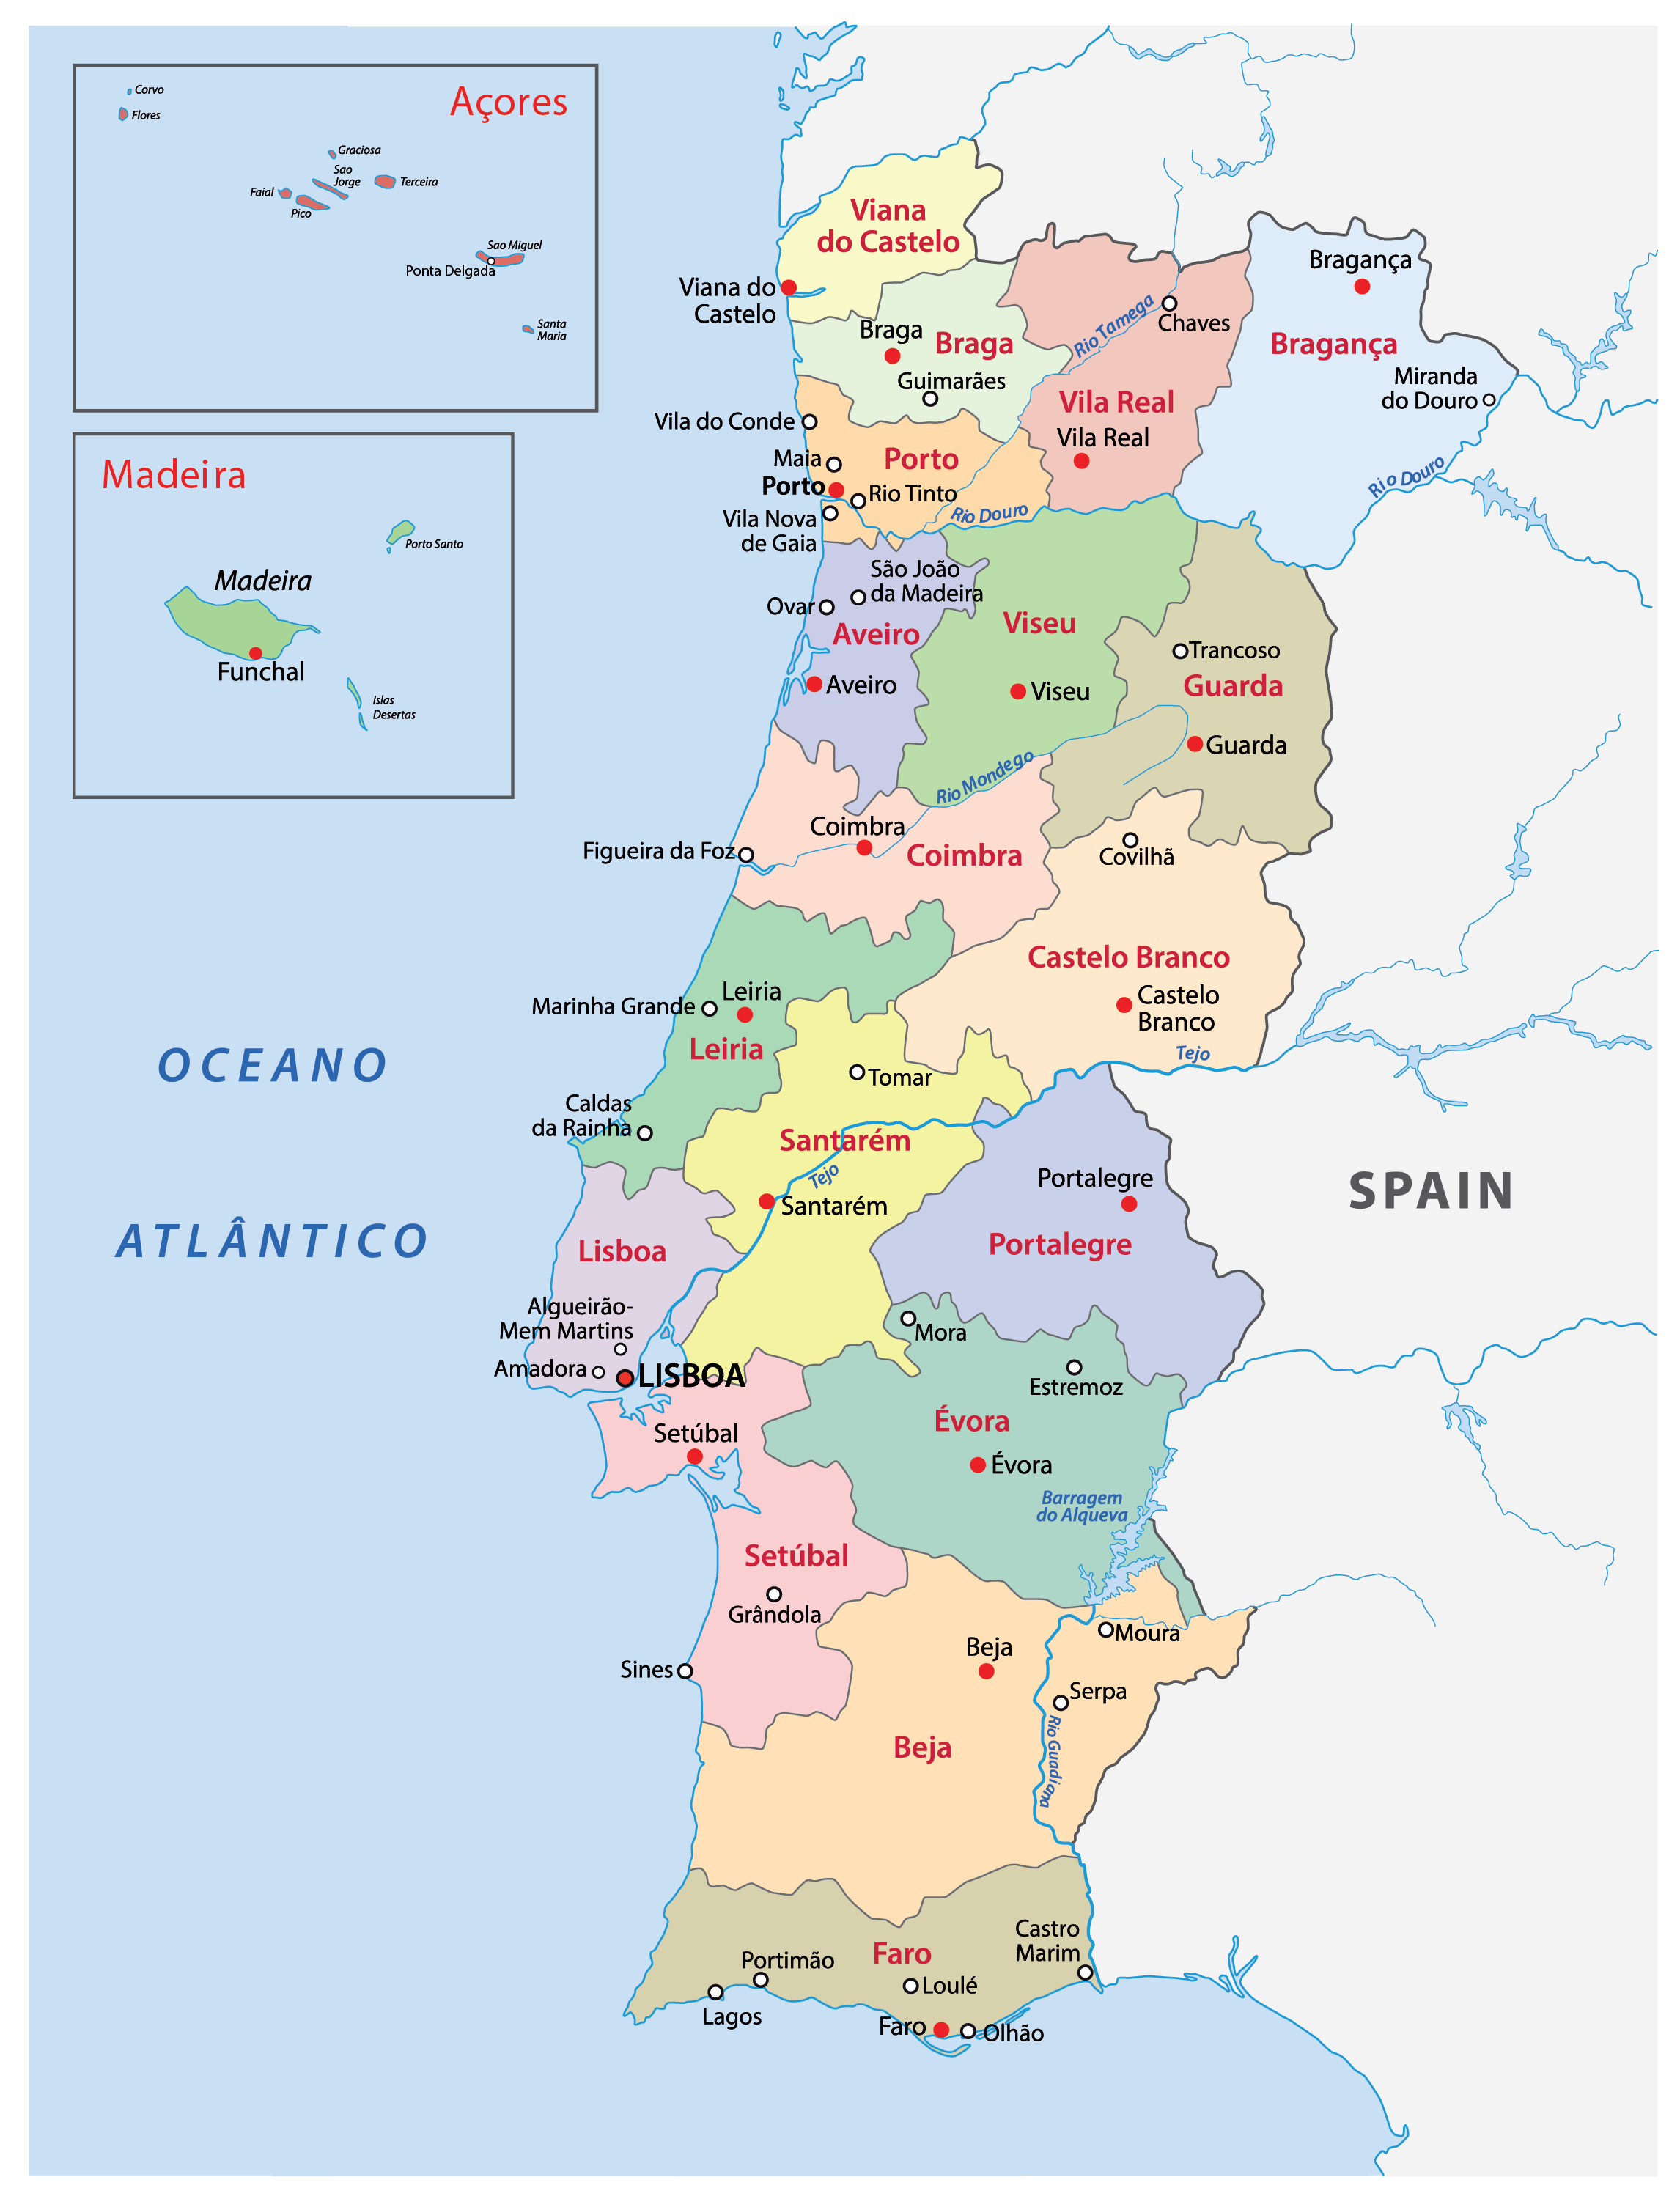 Map of the Algarve Region in Portugal